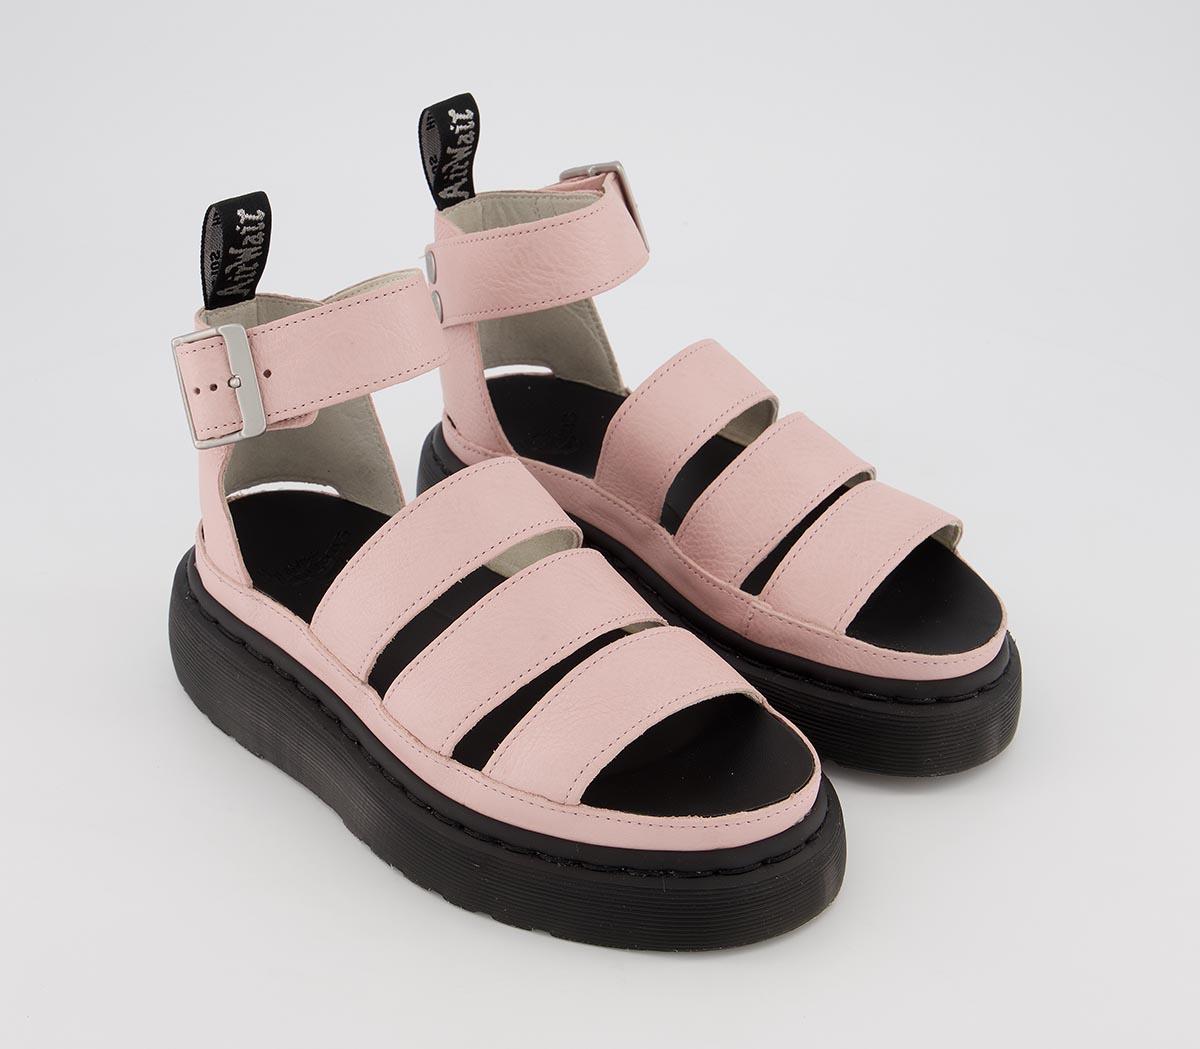 Dr. Martens Clarissa 2 Quad Sandals Pink Metallic - Women’s Sandals